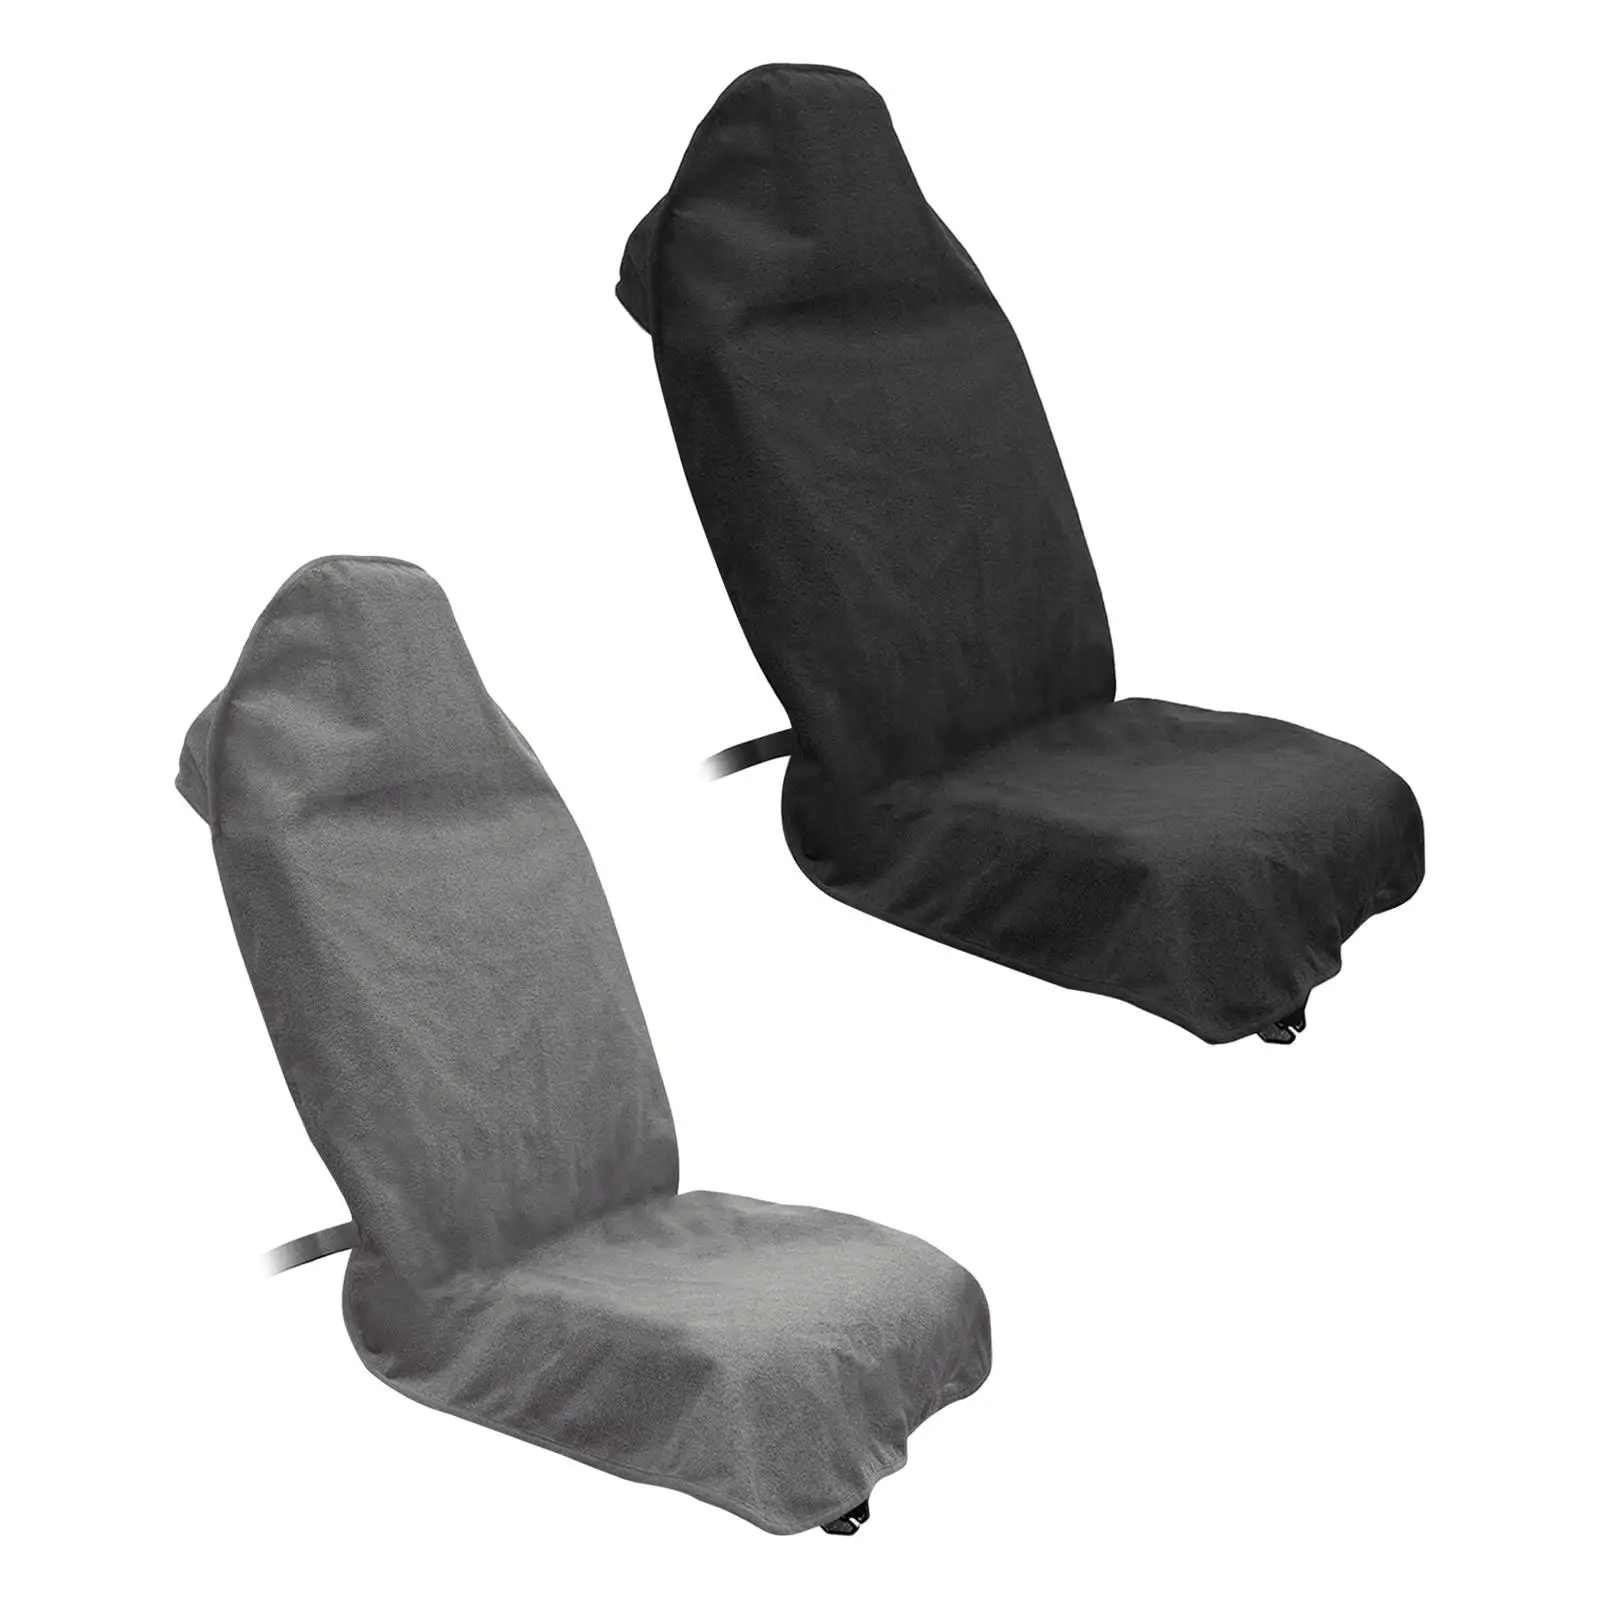 Universal Car Seat Cover Comfortable Anti Slip for Beach auto